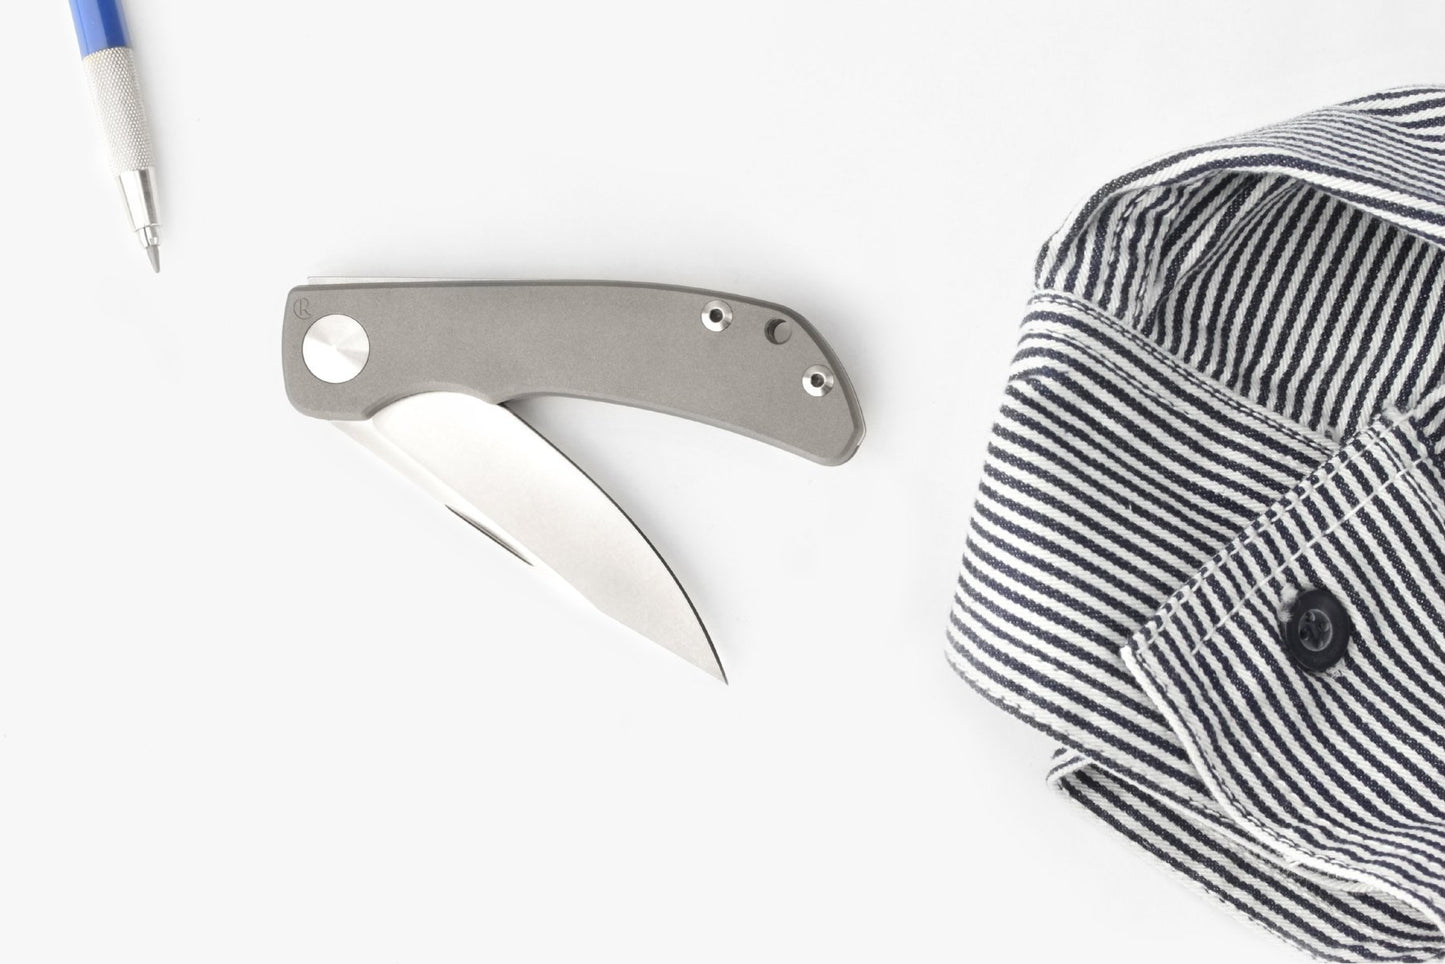 Chris Reeve Impinda 3.123" S35VN Titanium Folding Knife with Leather Sheath IMP-1000